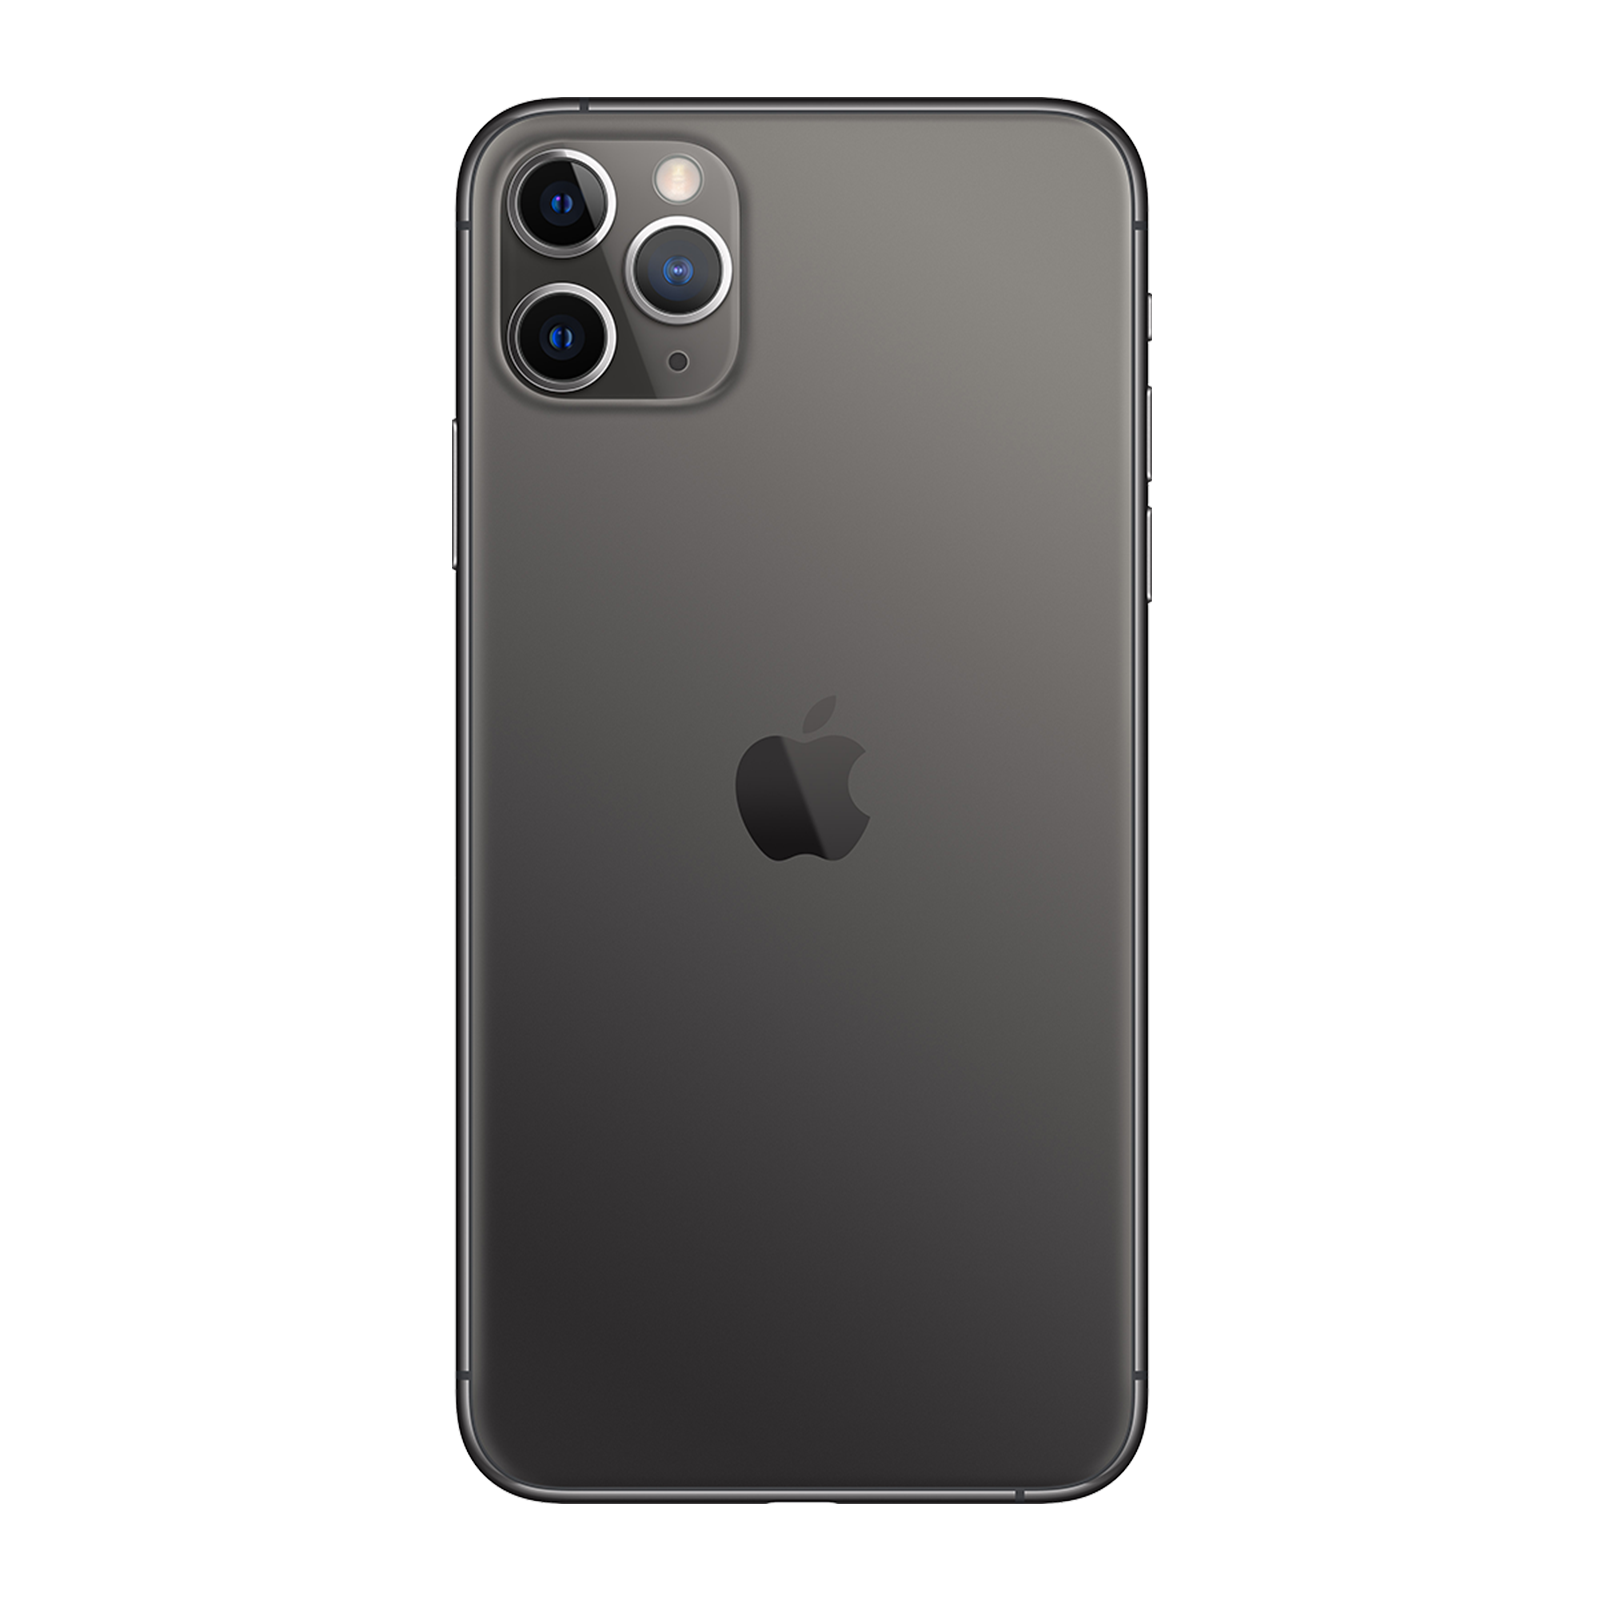 Apple iPhone 11 Pro 64GB Space Grey Very Good - Unlocked